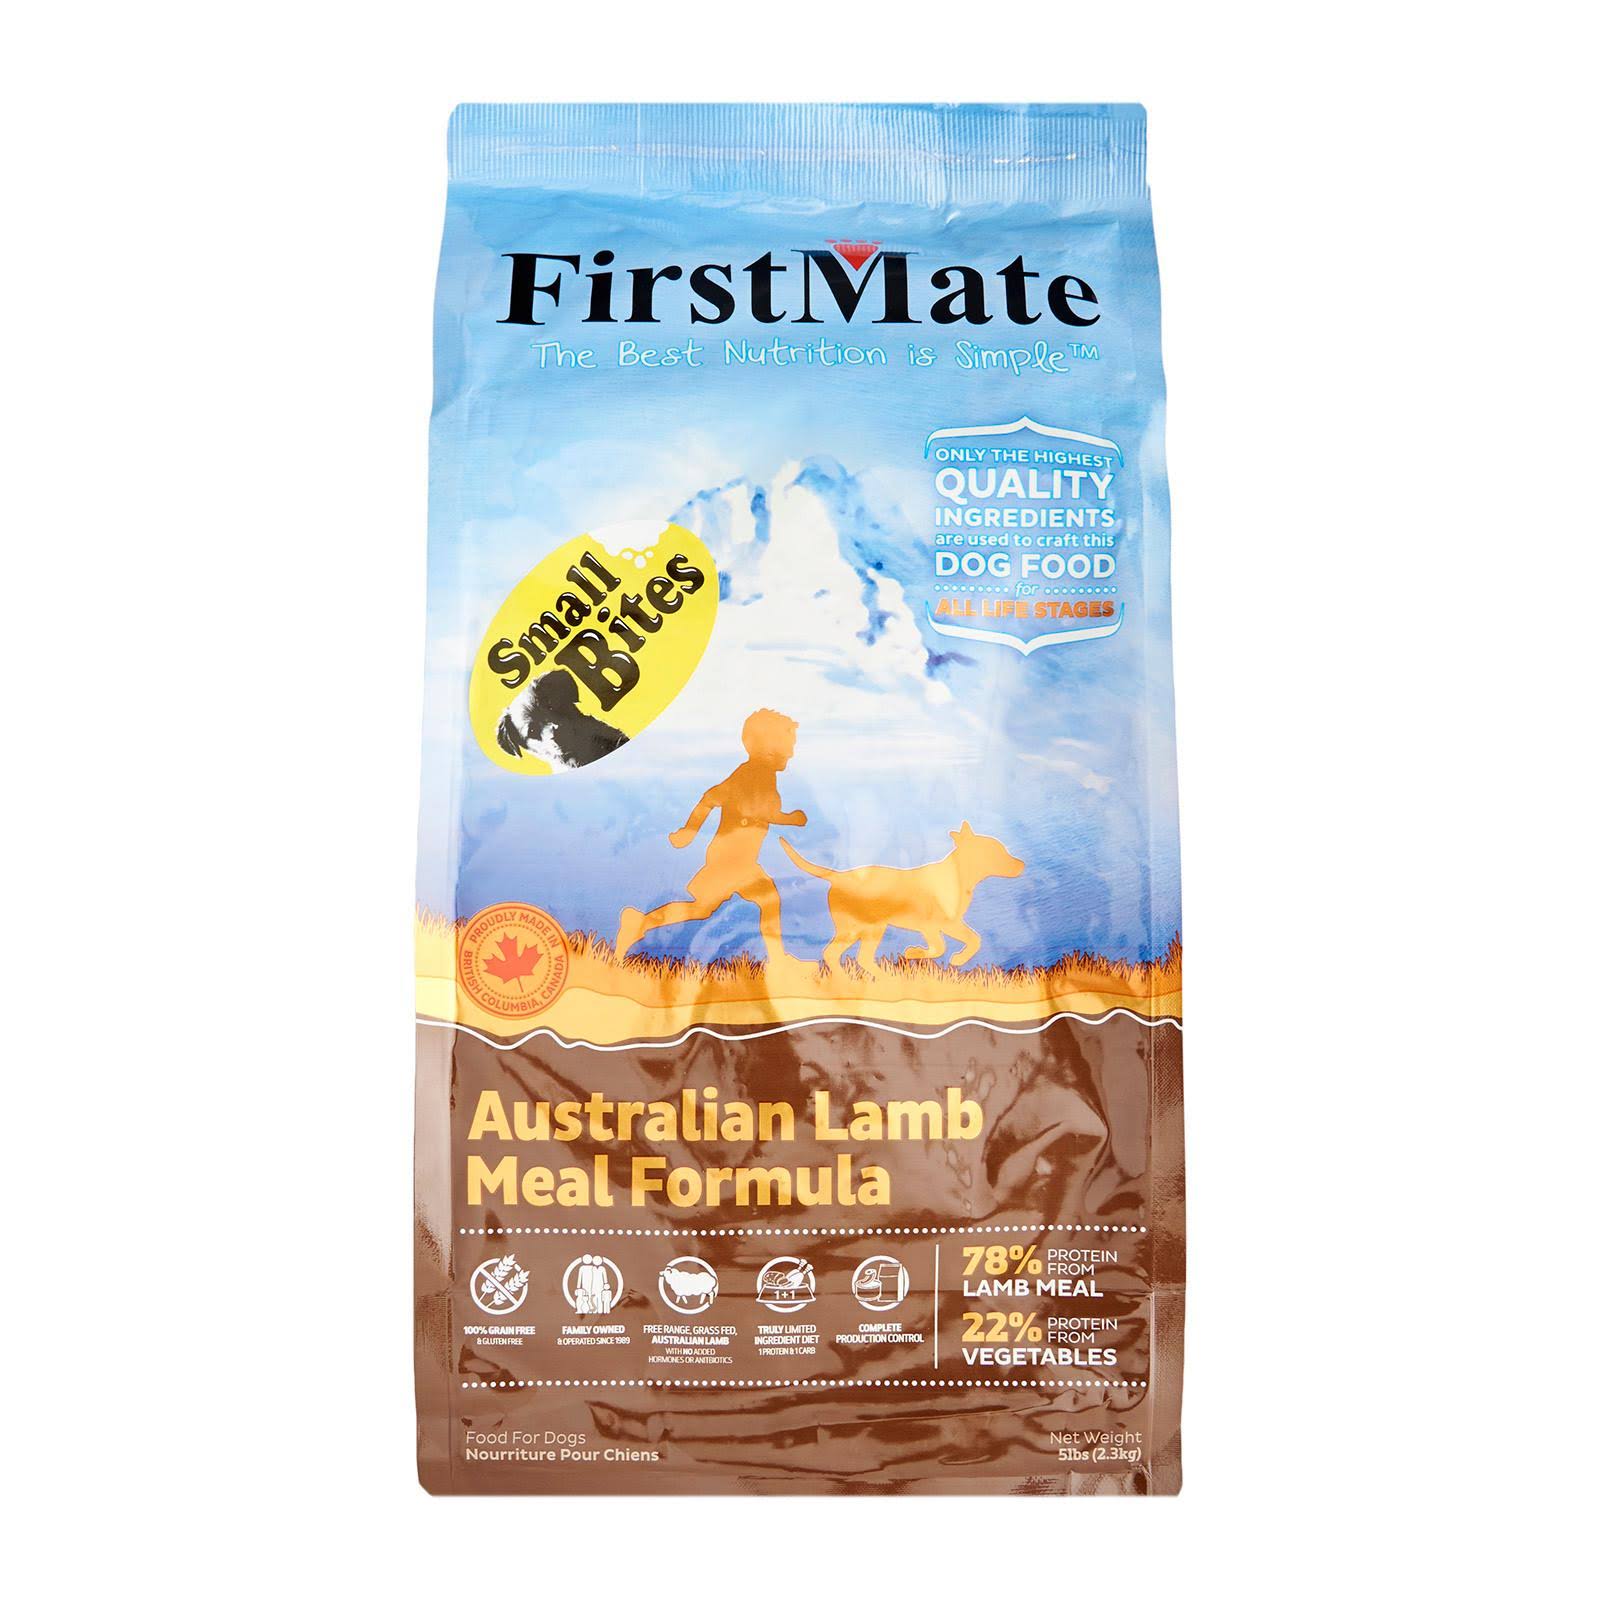 FirstMate Grain Free Australian Lamb Meal Formula Small Bites Dog Food 5 lbs